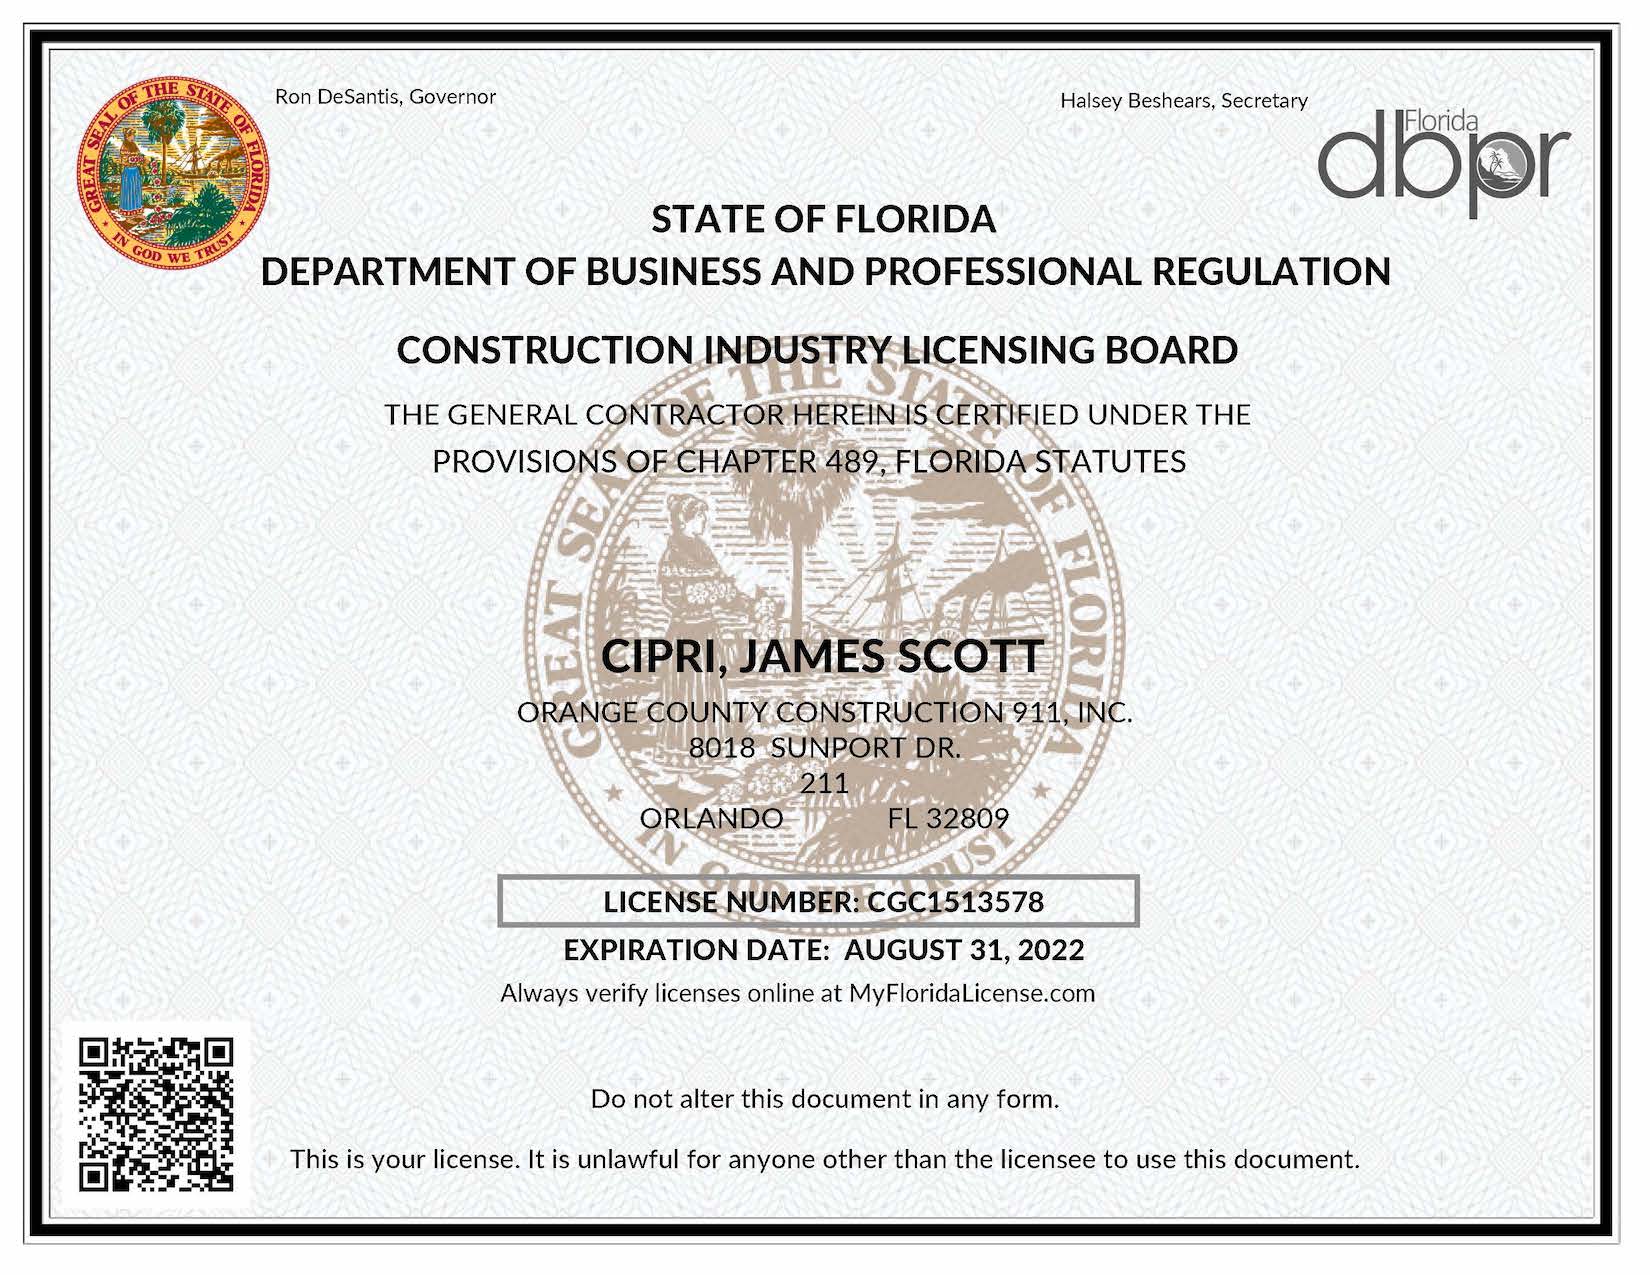 Orange County Construction 911 Licenses Certifications Orlando Fl